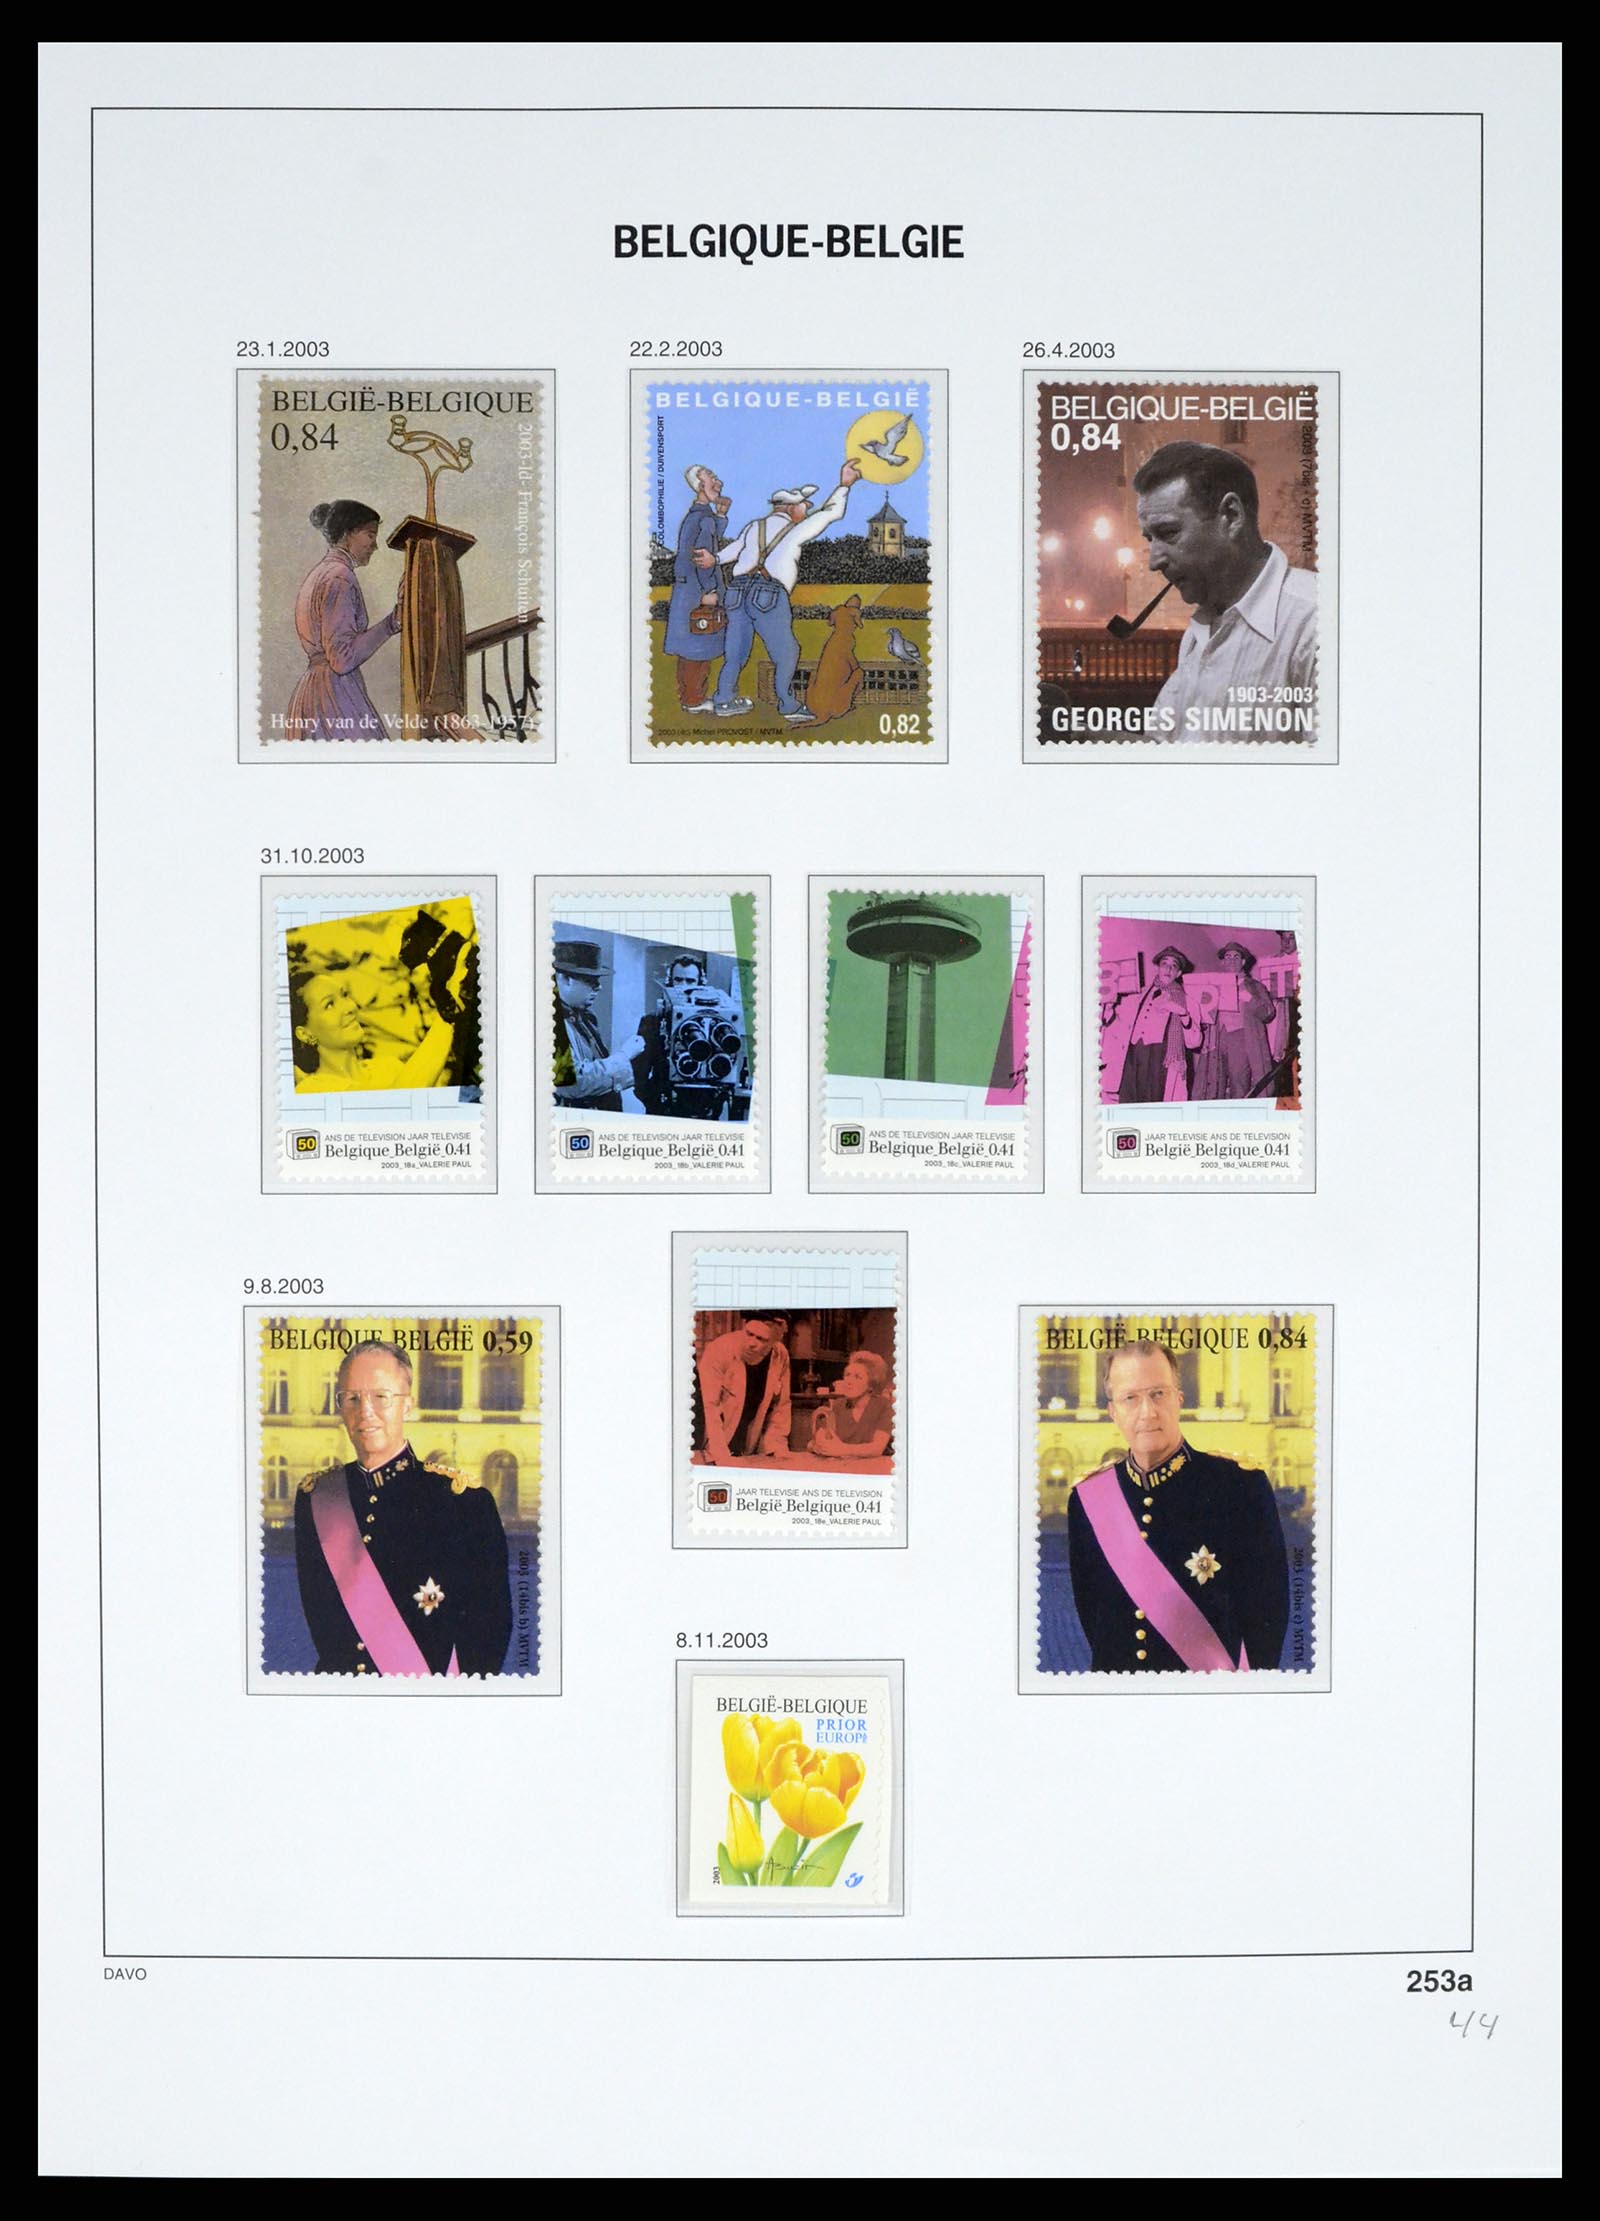 37367 309 - Stamp collection 37367 Belgium 1849-2003.